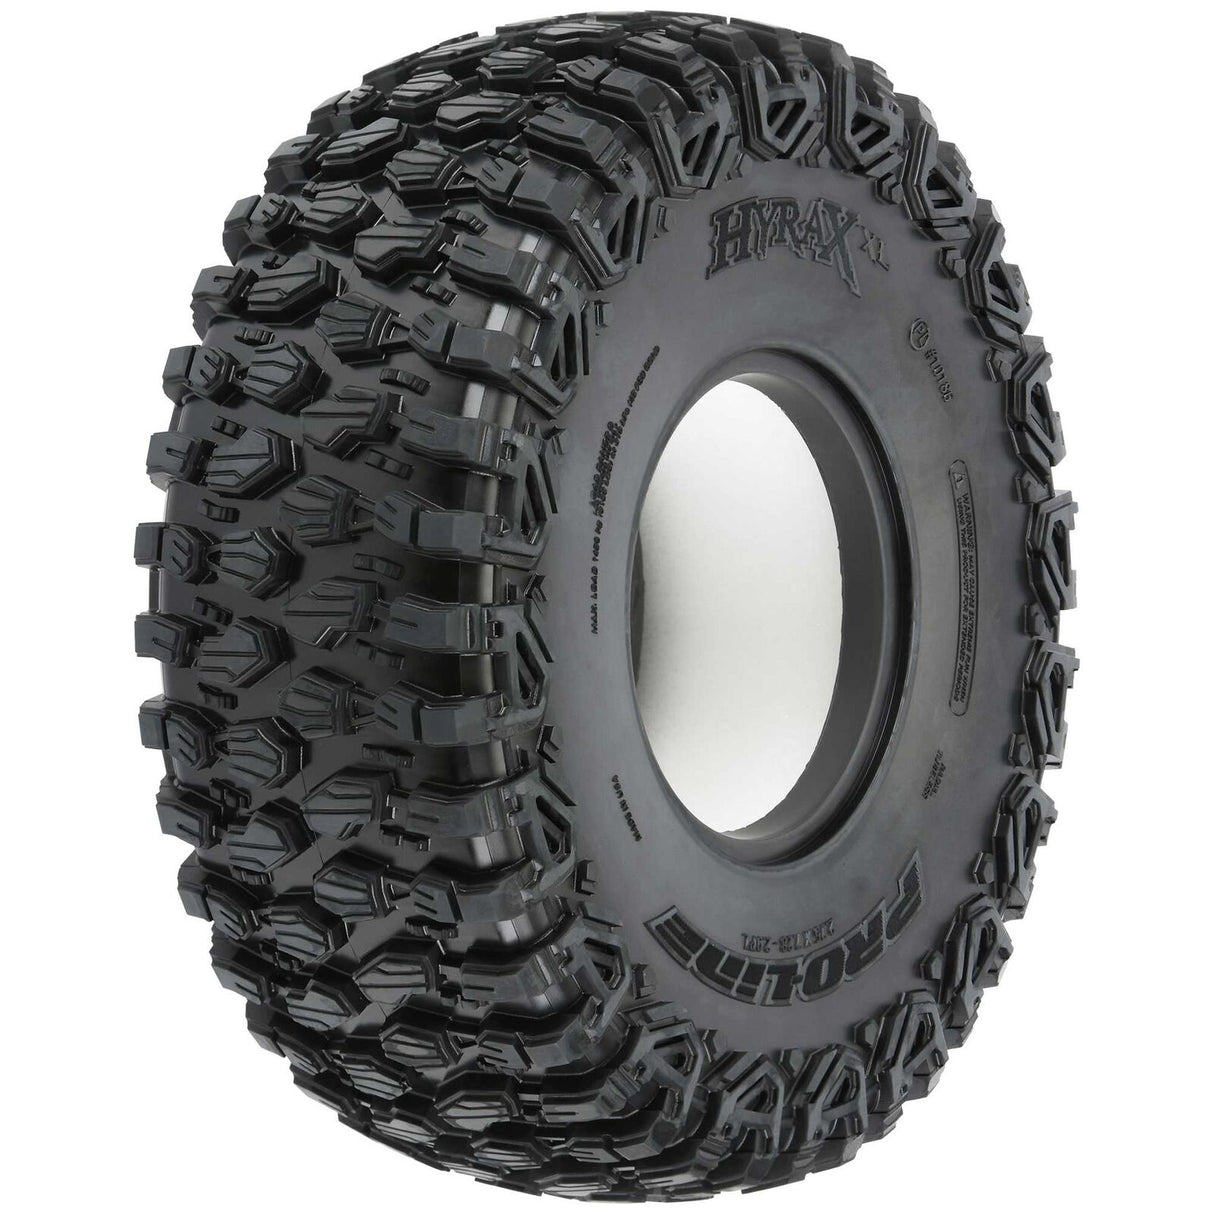 Pro-Line 1/6th Hyrax XL G8 Fr/Rr 2.9" Rock Crawling Tyres (2)